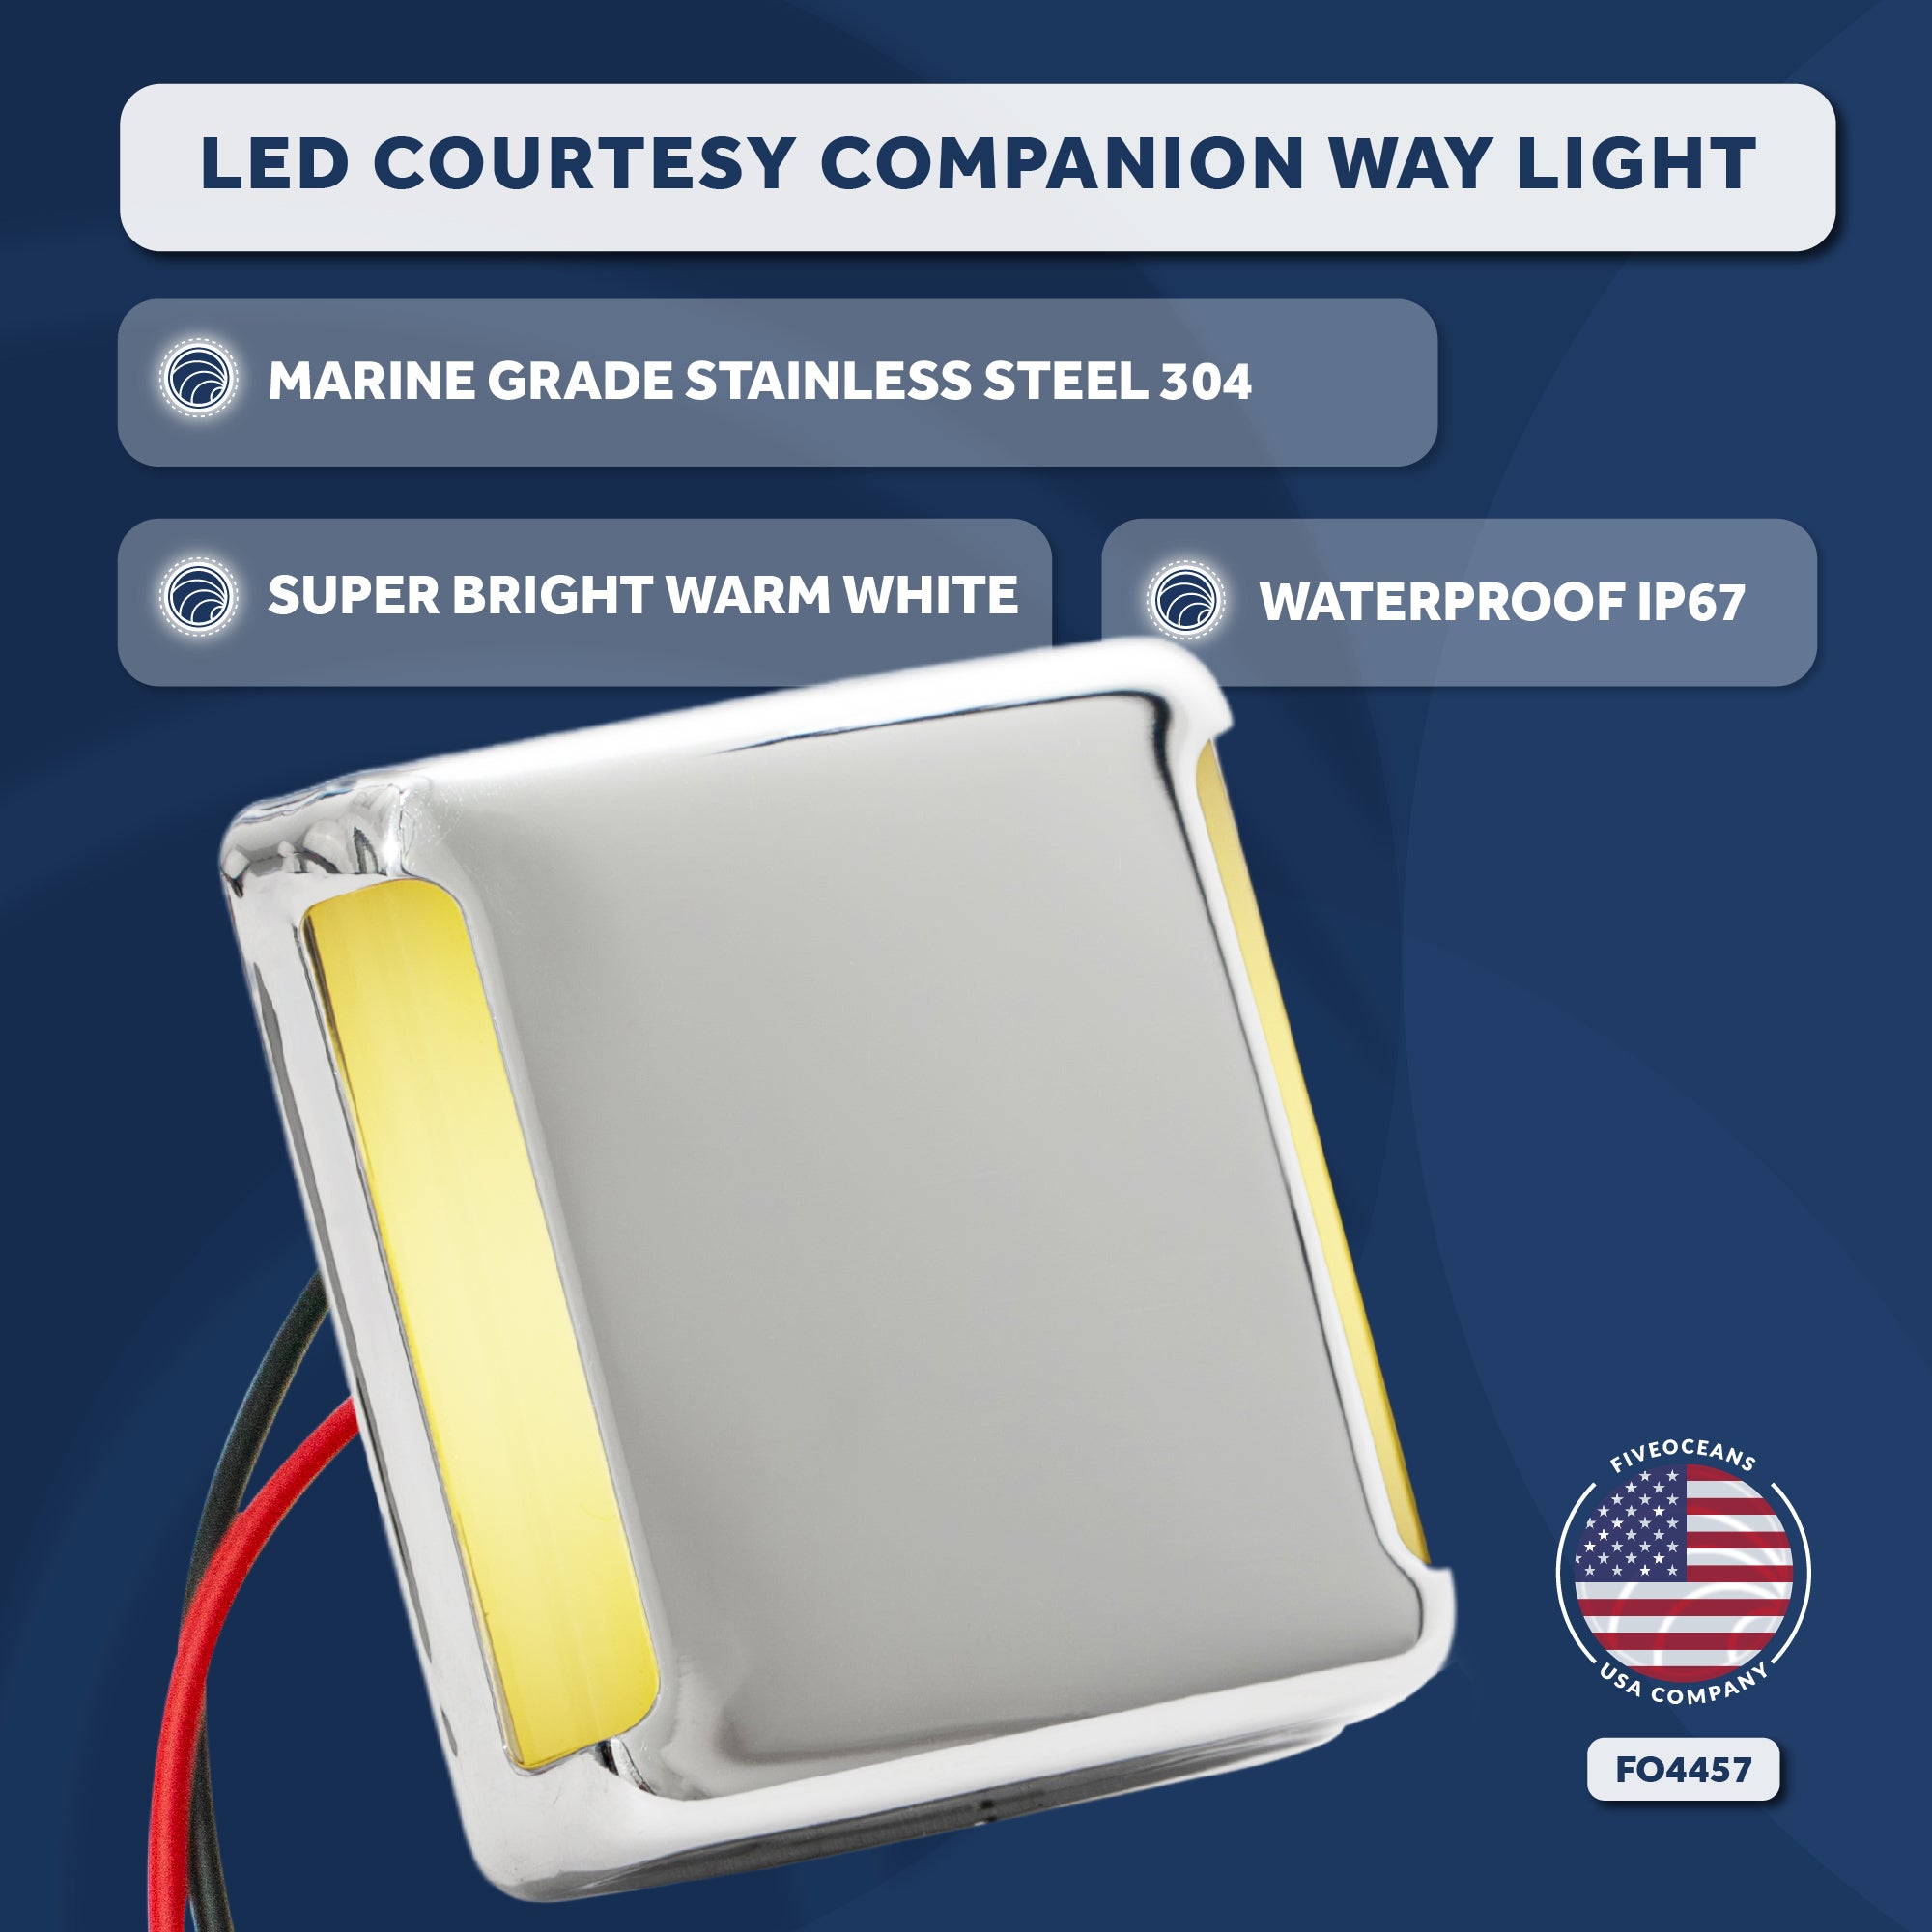 LED Courtesy Companion Way Light, Square, Warm White - FO4457